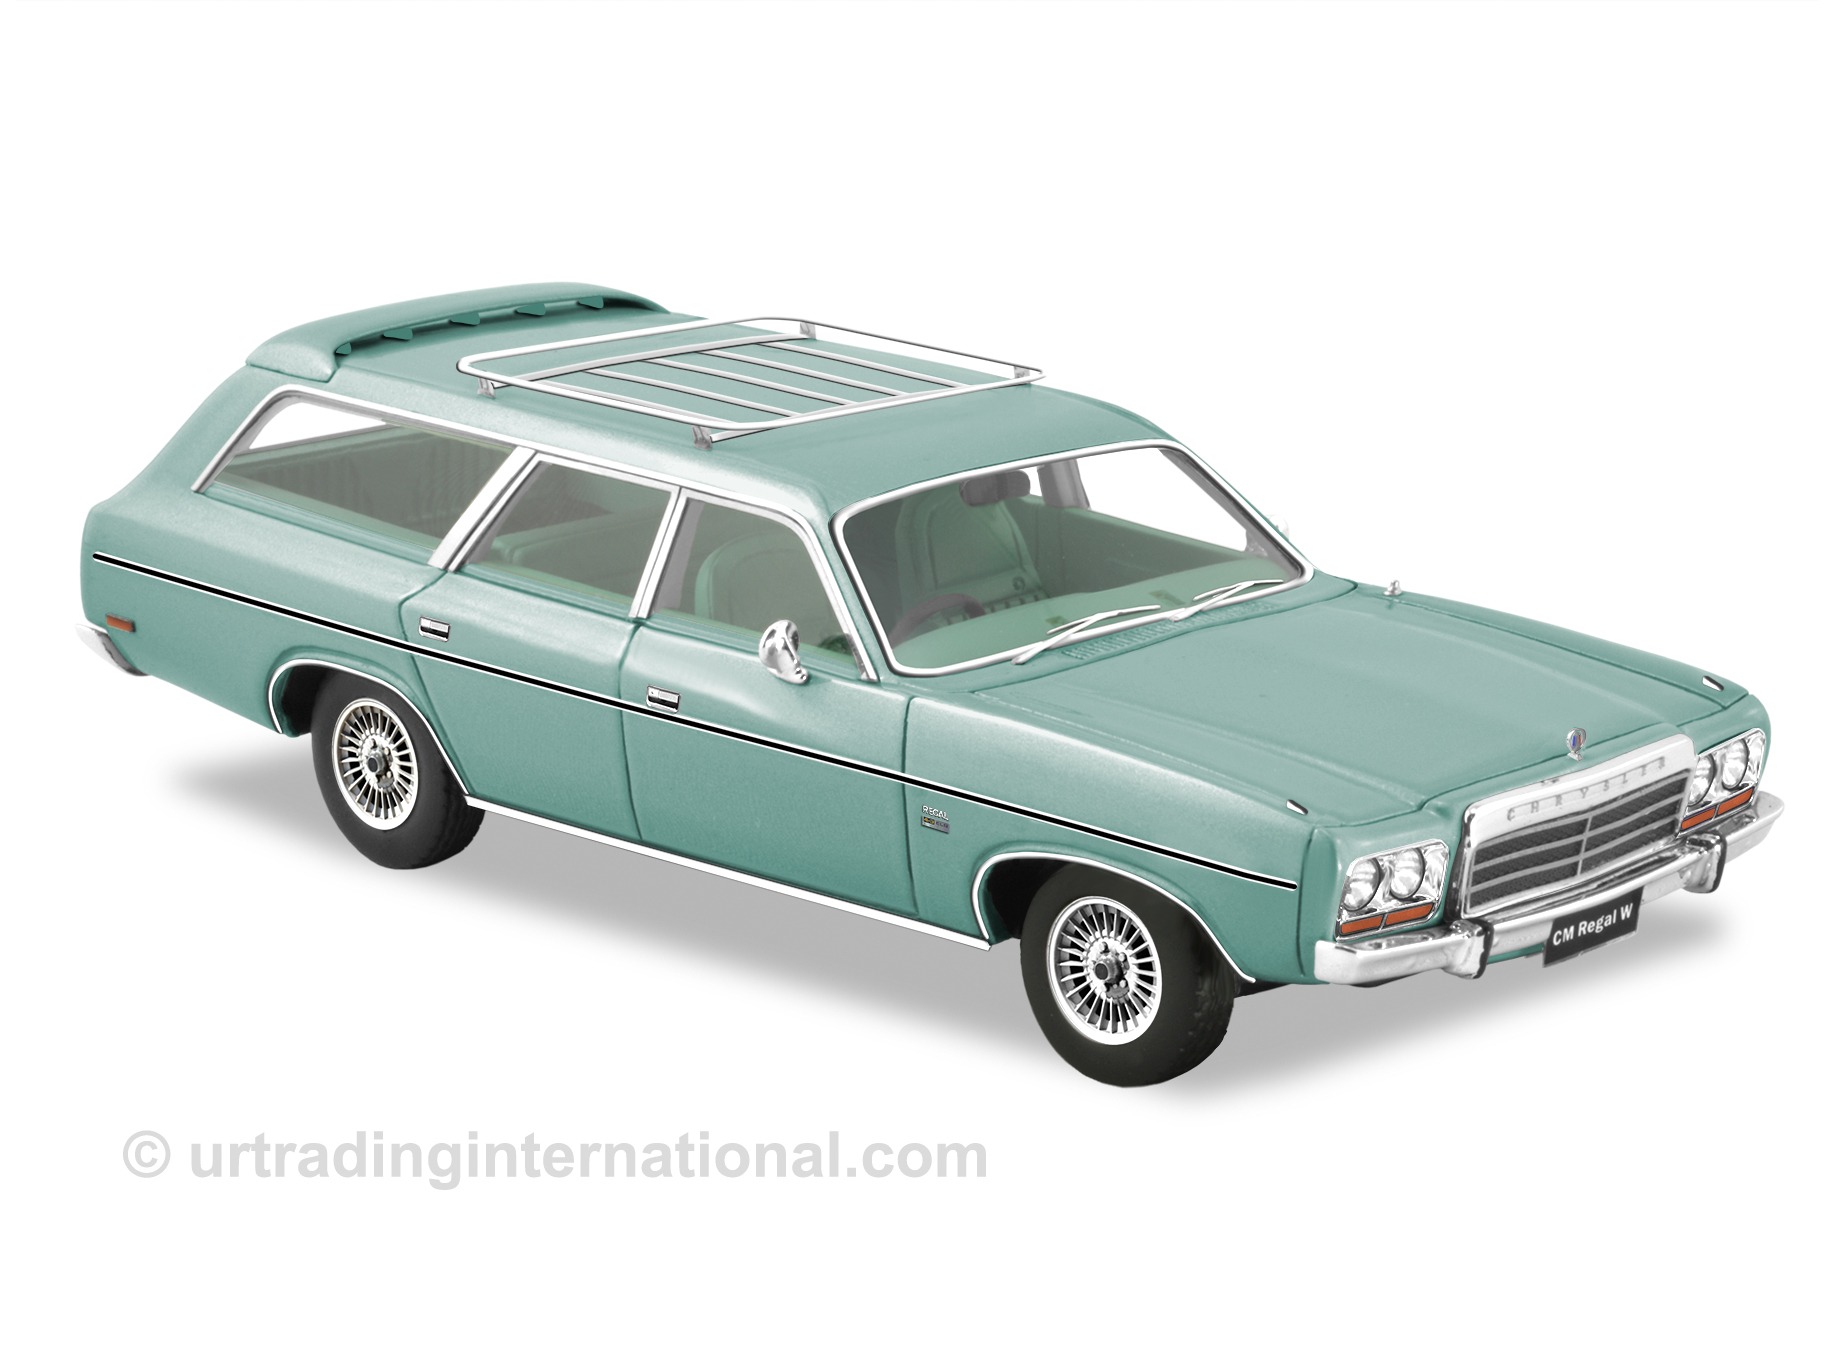 1981 CM Valiant Regal Wagon – Teal Green